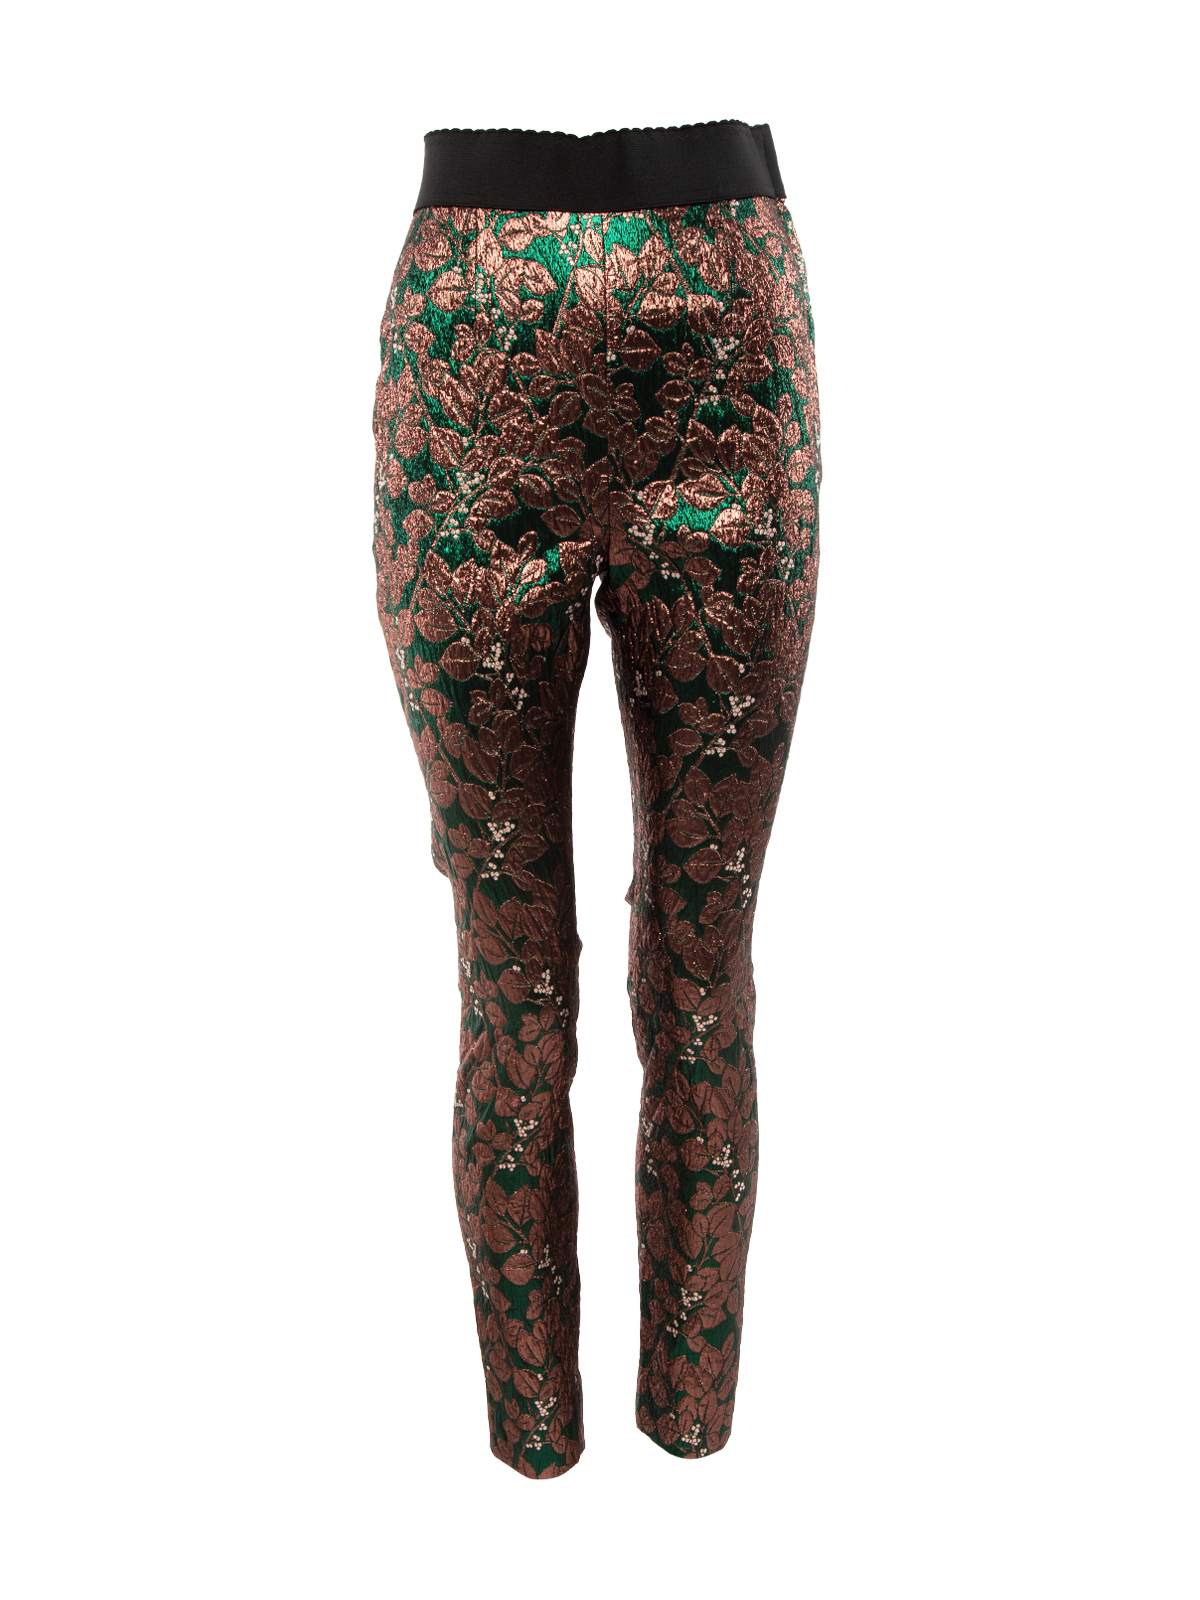 Dolce & Gabbana Metallic Thread Floral Trousers